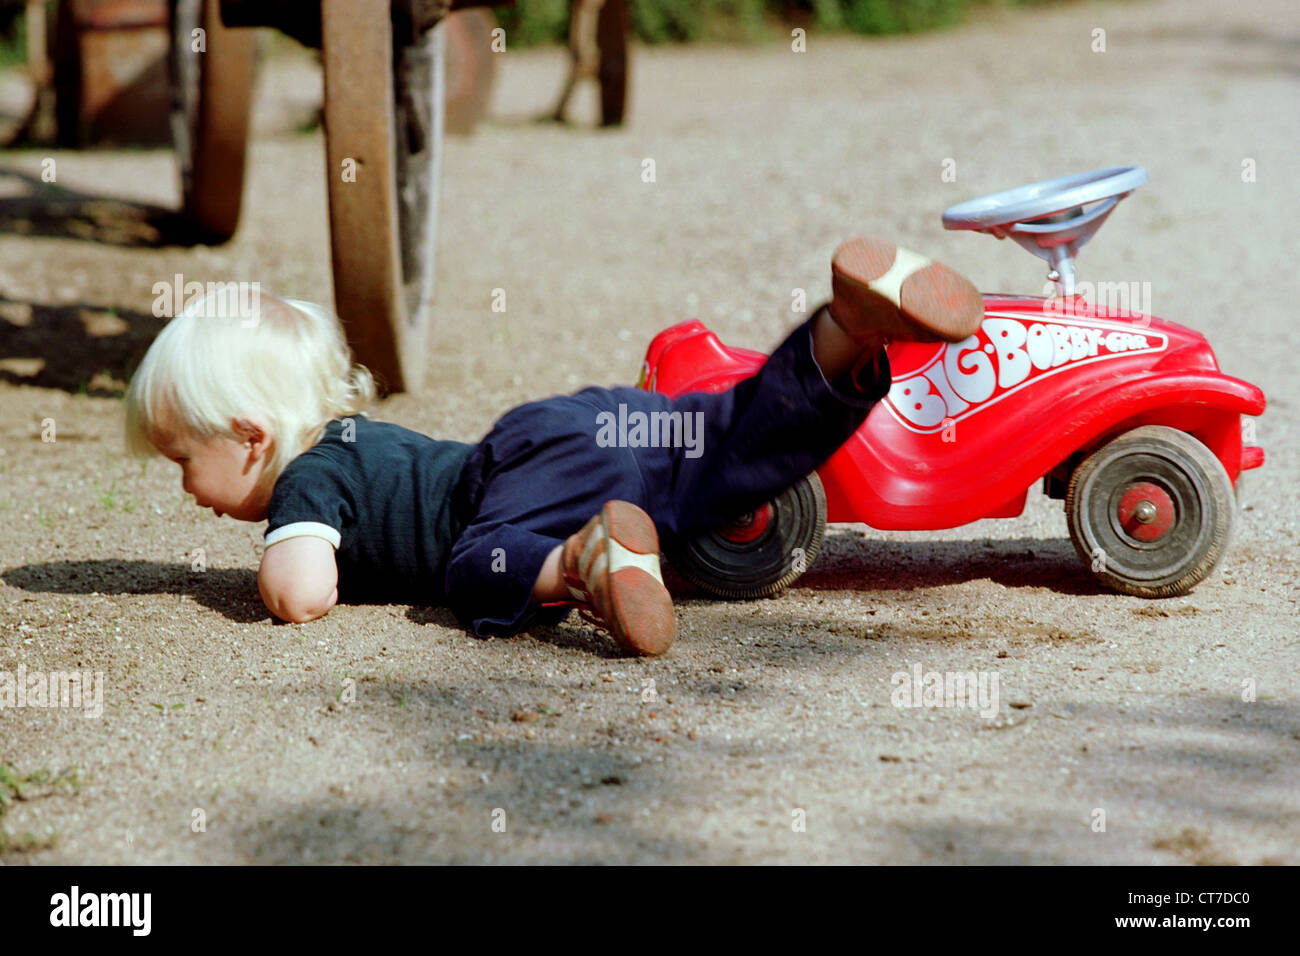 One child from his crashes BobbyCar Stock Photo - Alamy